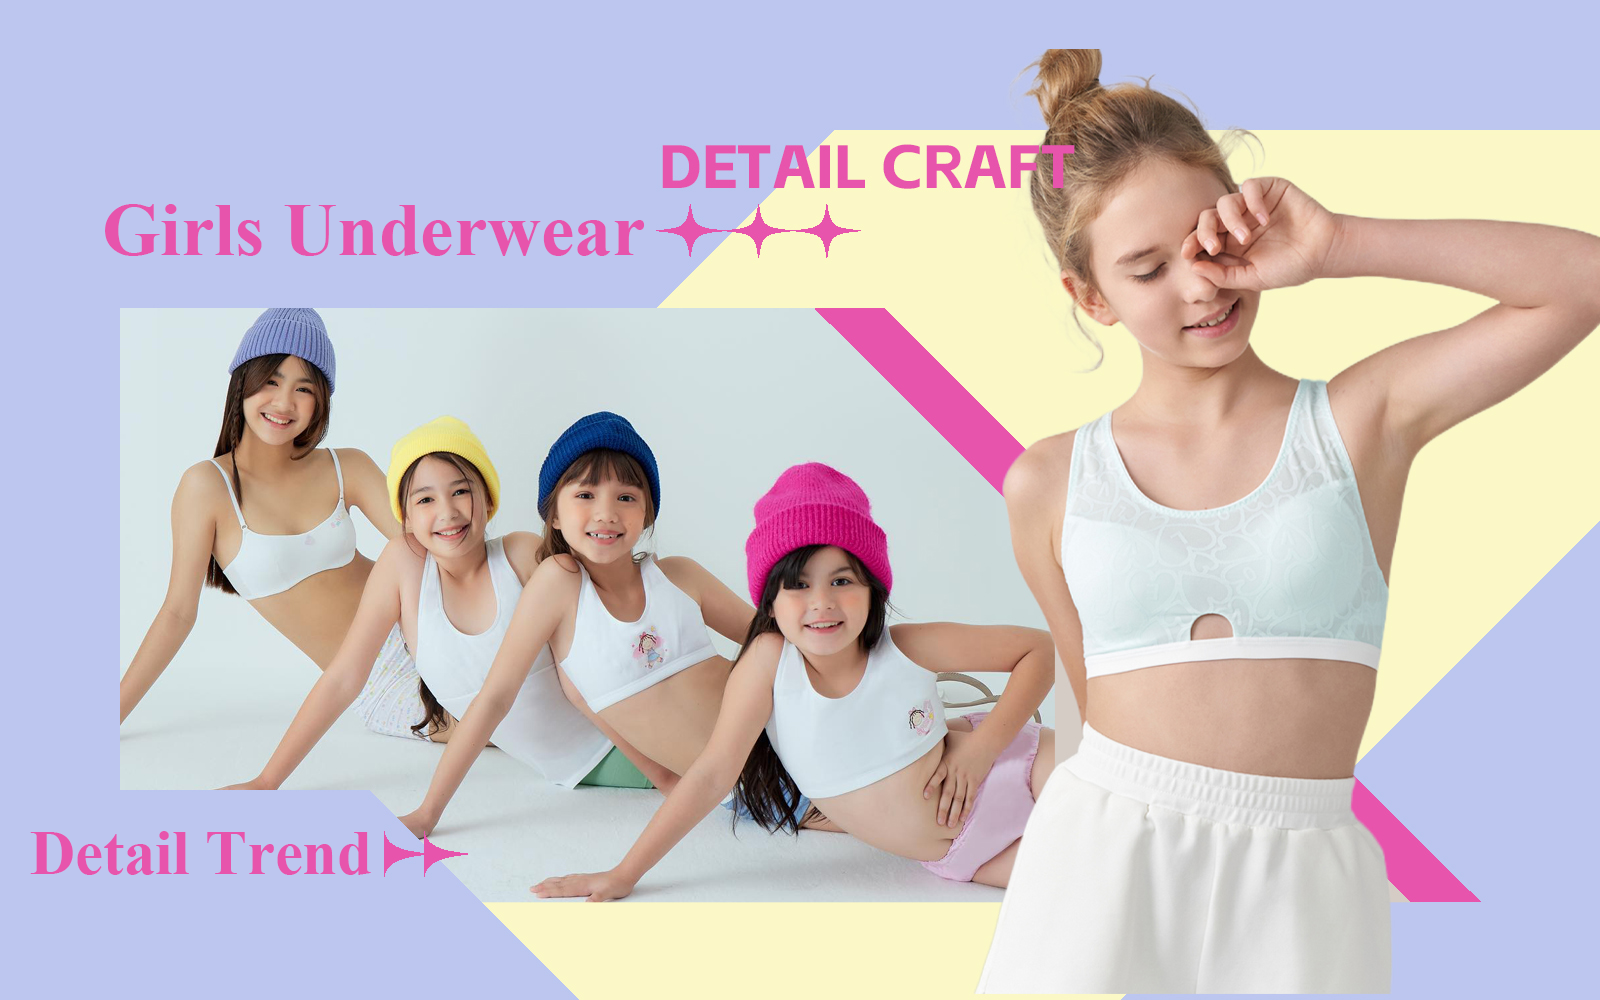 Free Growth -- The Detail & Craft Trend for Girls' Underwear